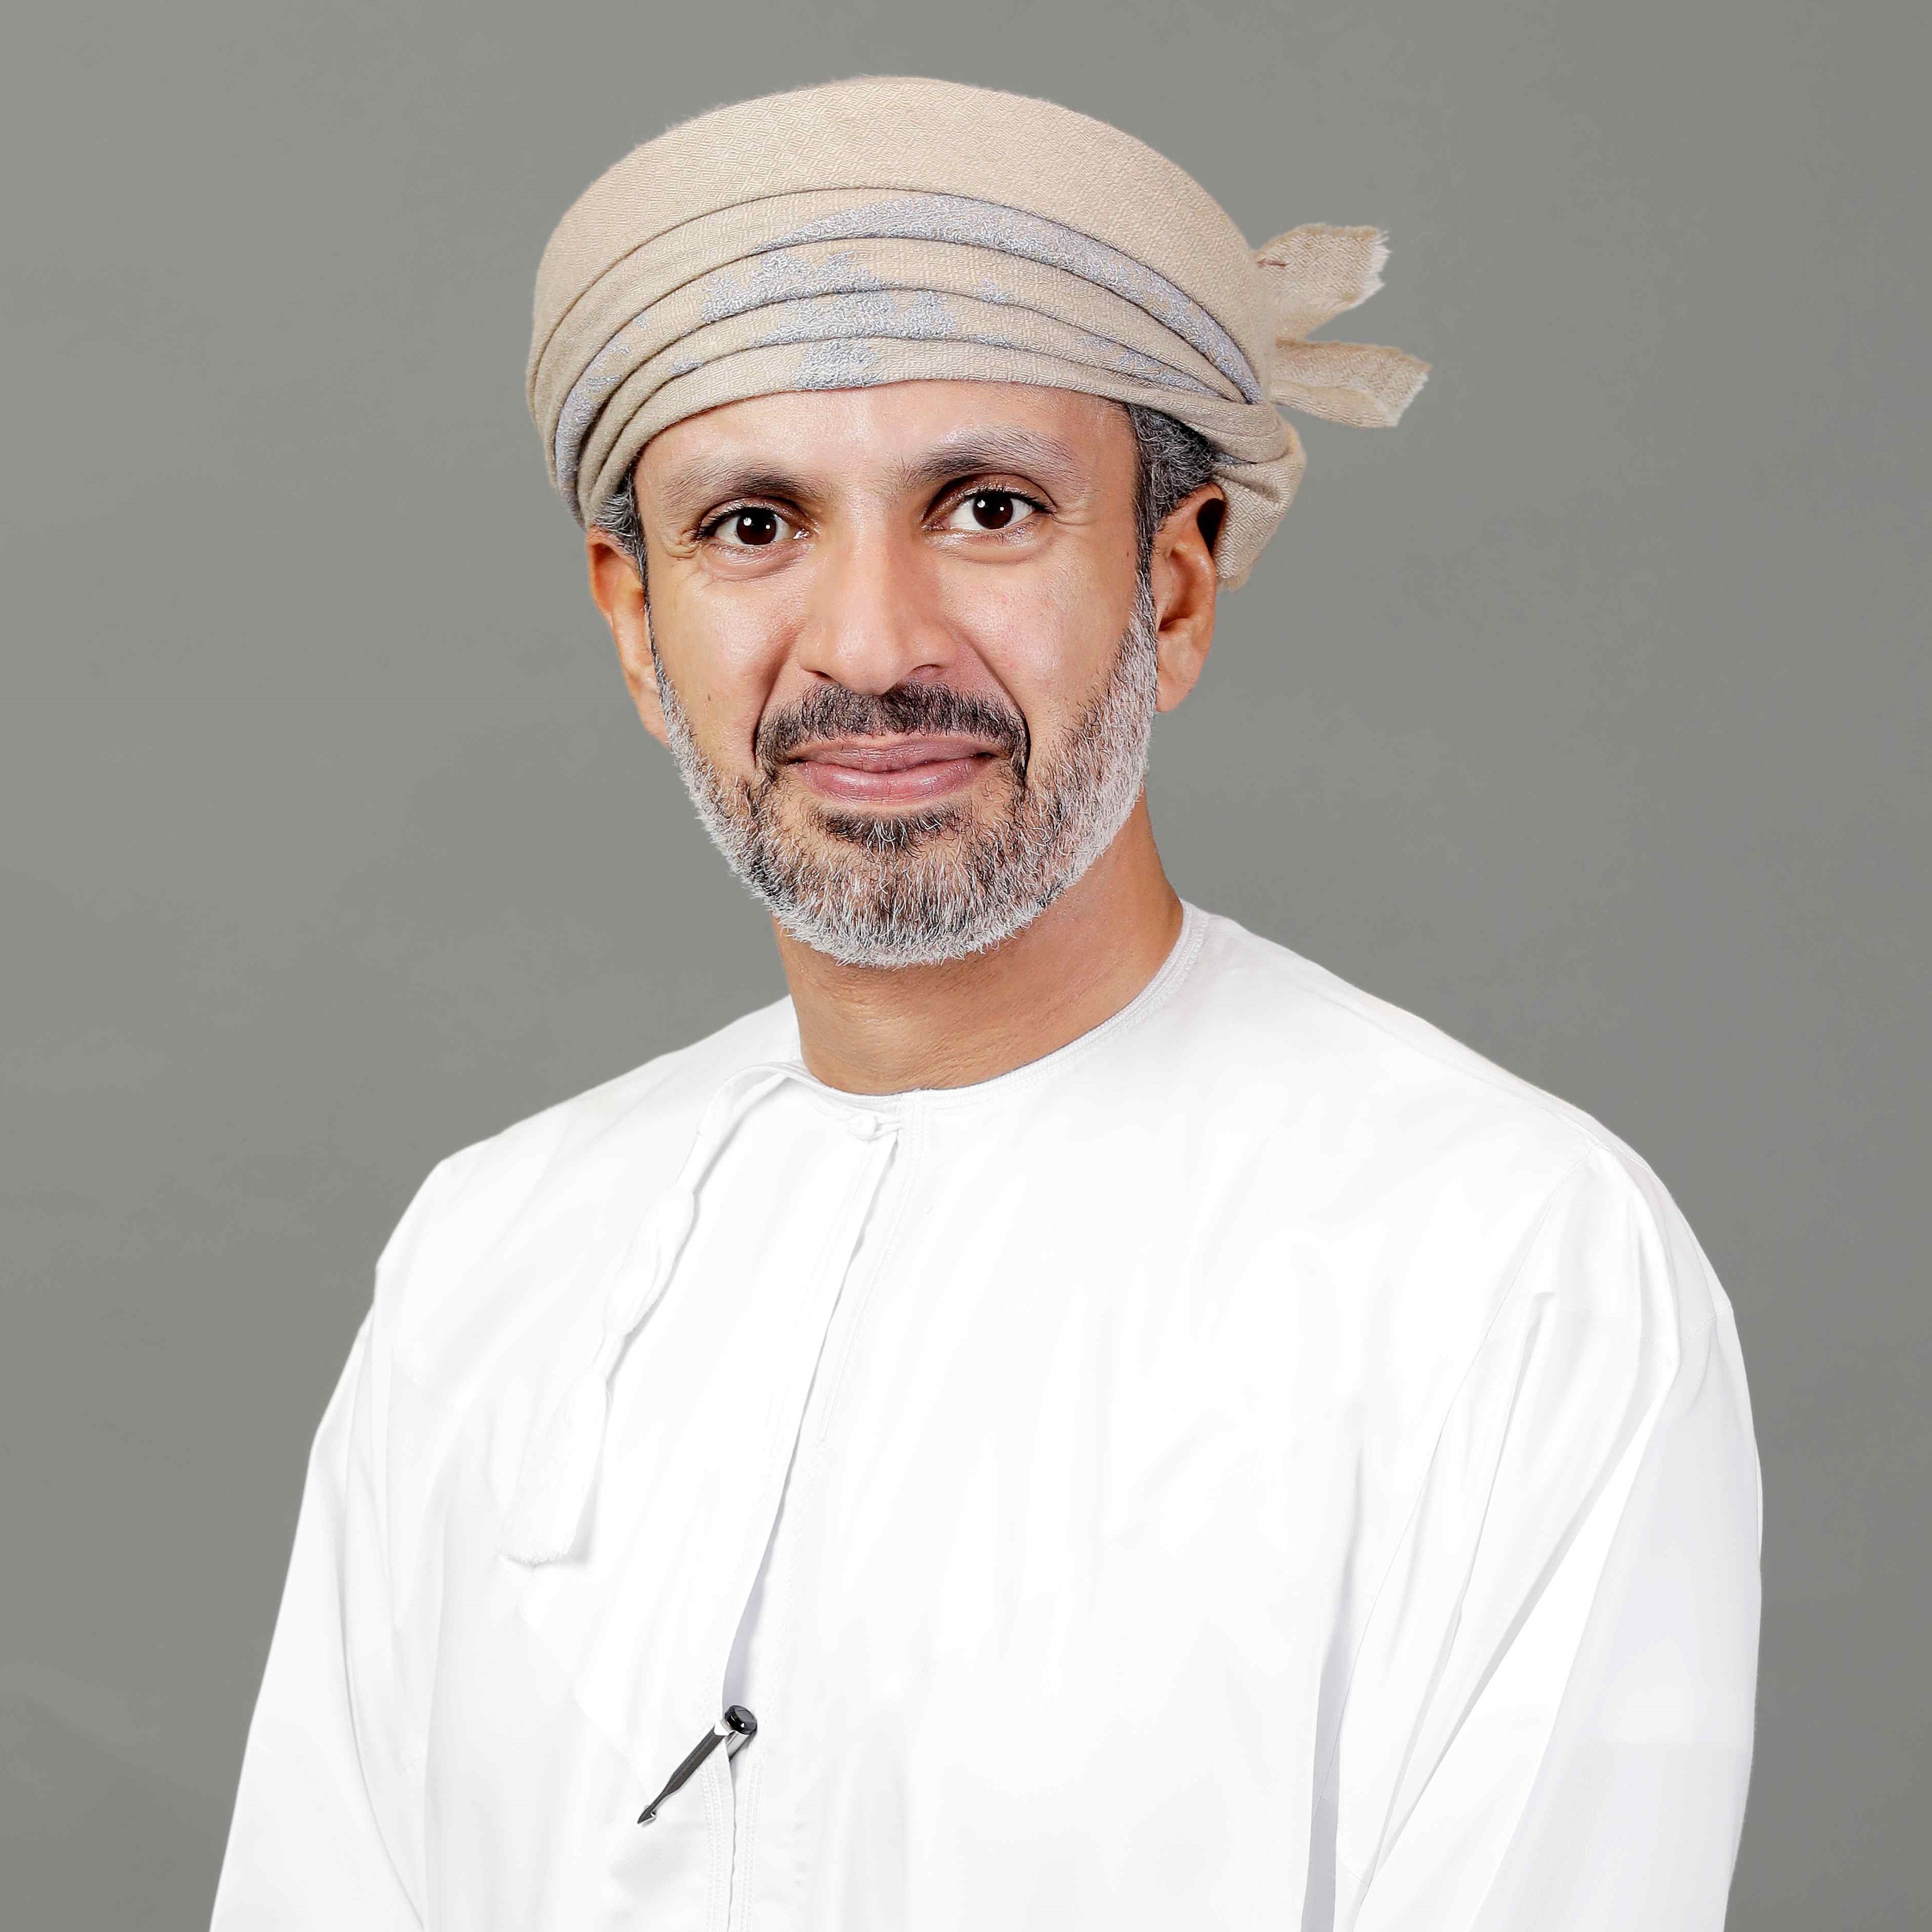 Mr. Mohammed Abdullah Al Farsi